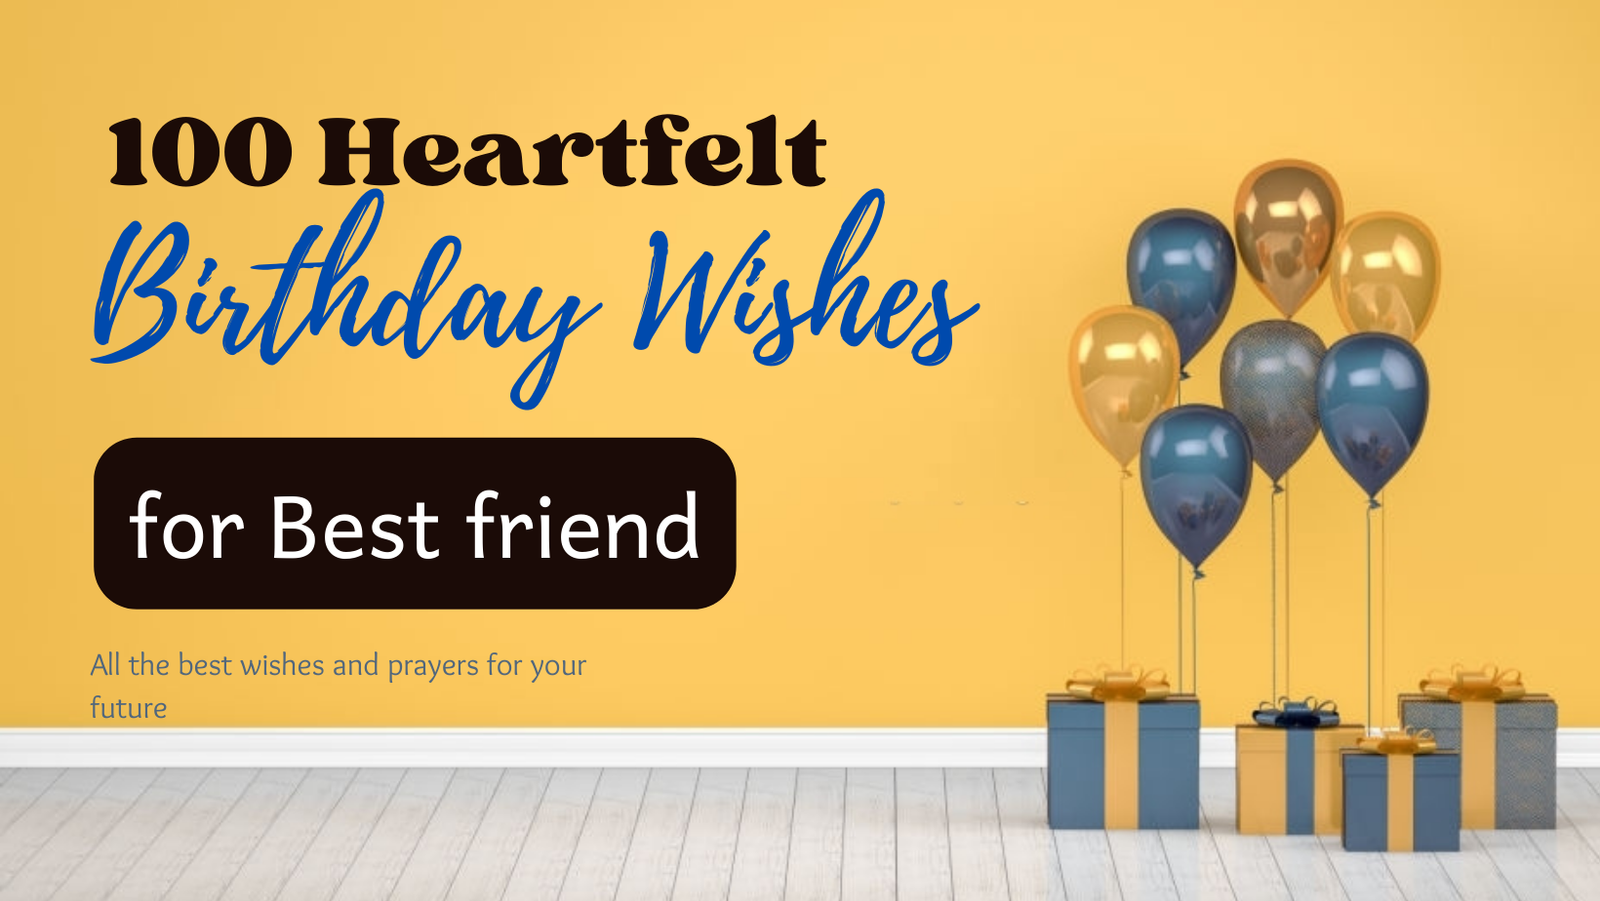 100 Heartfelt Birthday Wishes for Your Best Friend